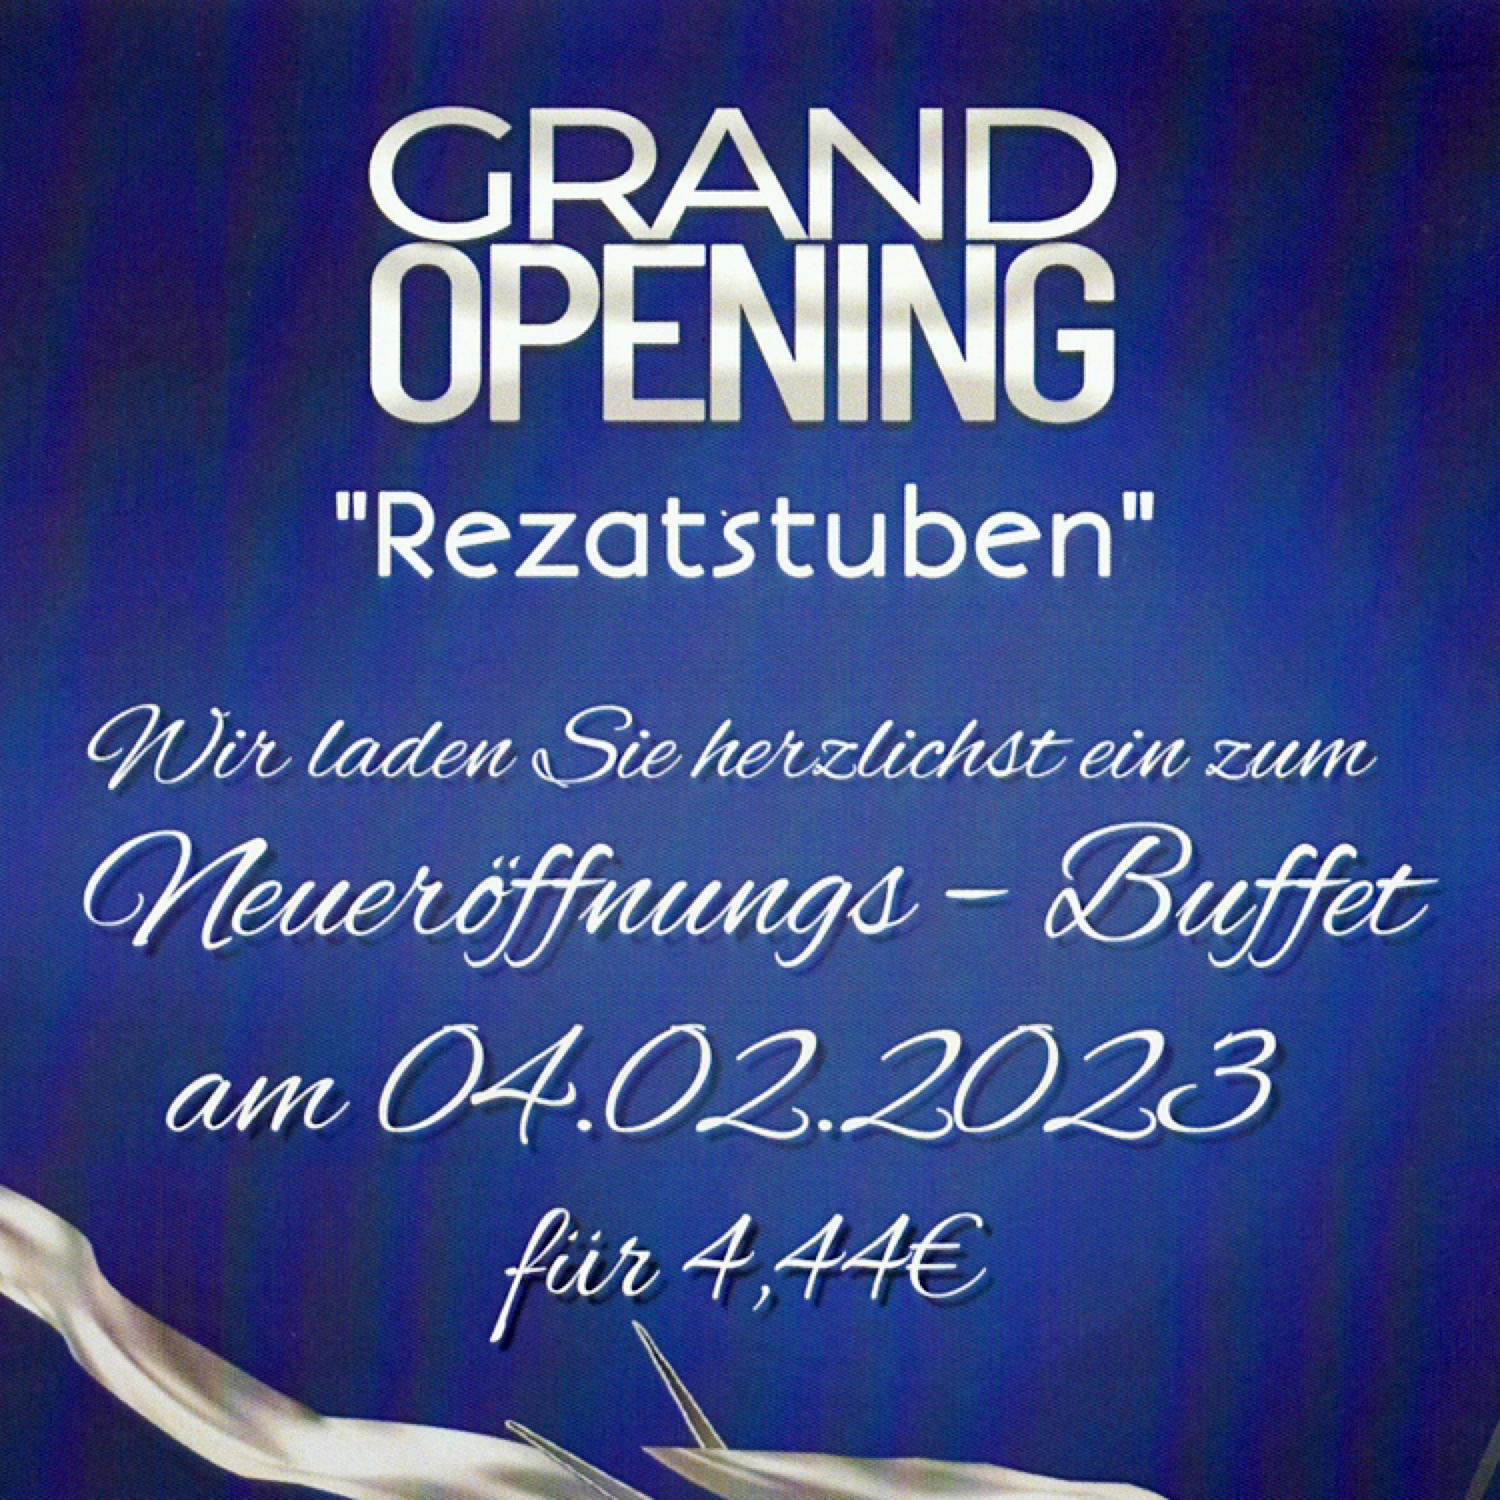 Restaurant "Rezatstuben" in Ansbach